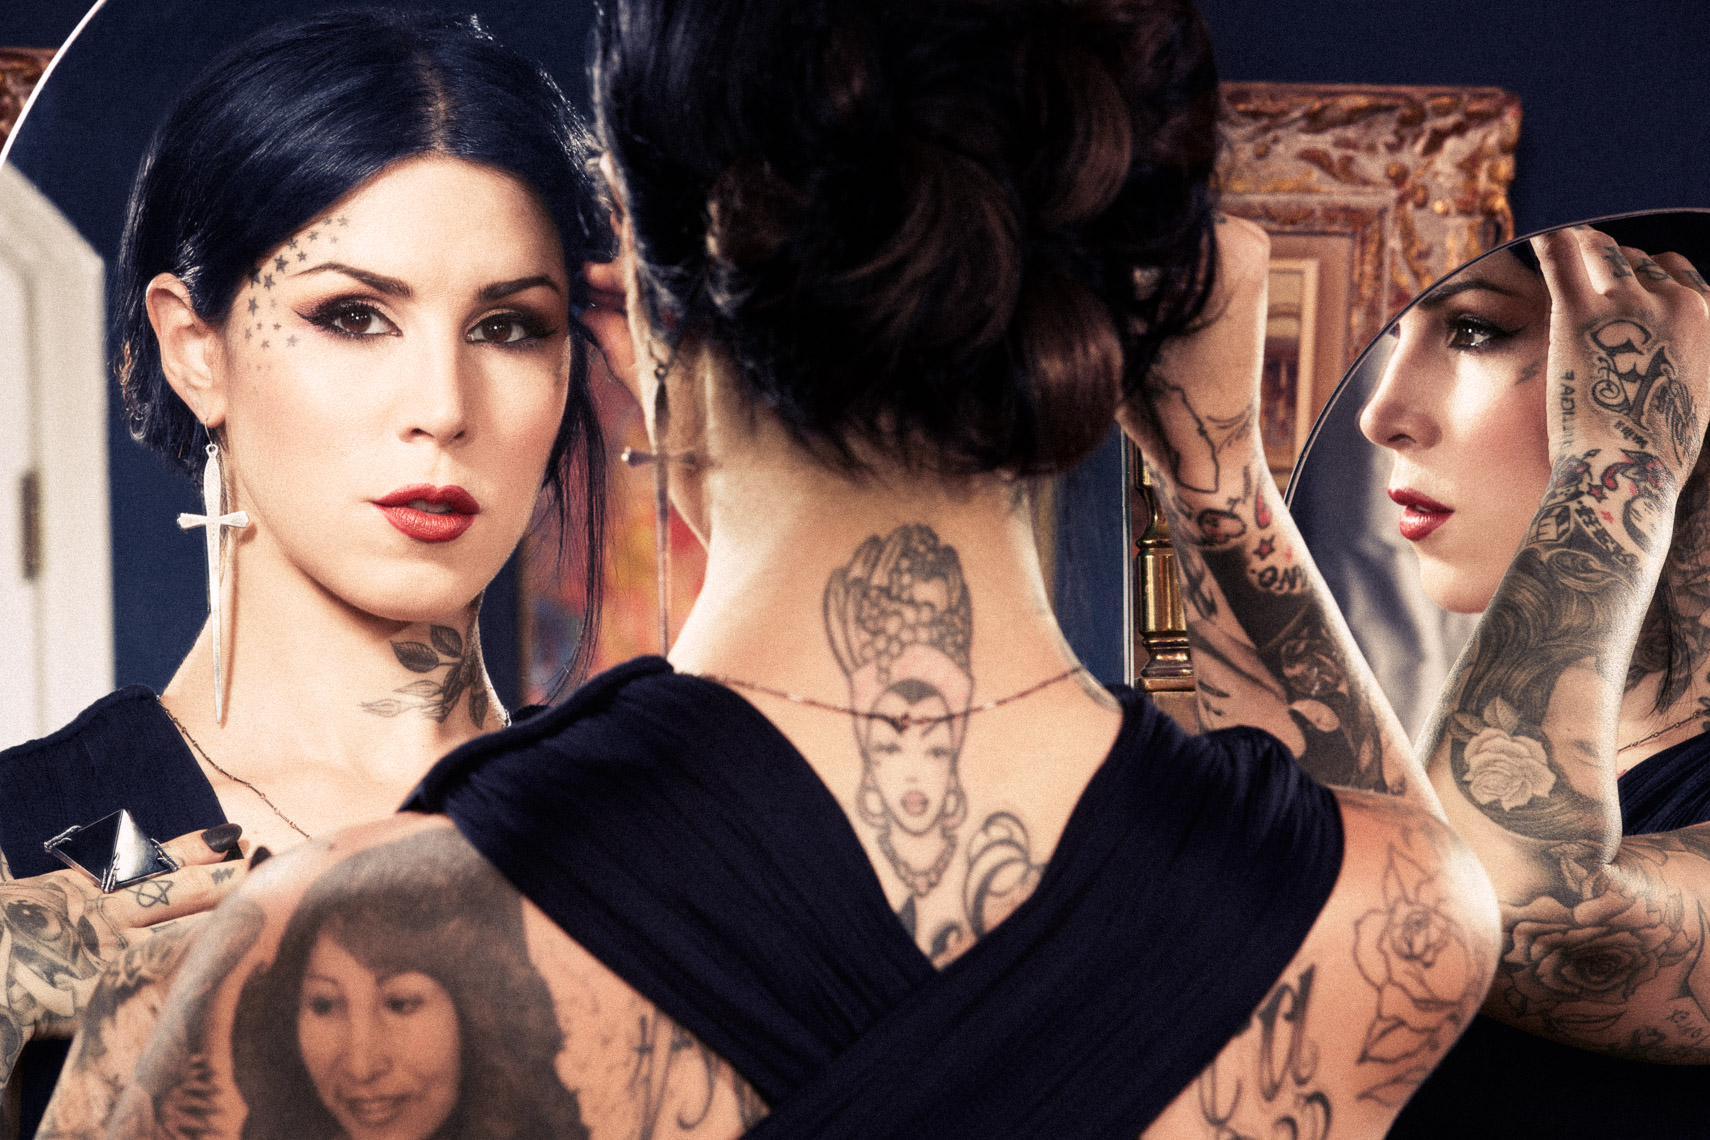 Kat Von D Women Tattoo Tattoo Artist Face Mirror Reflection Inked Girls 1710x1140